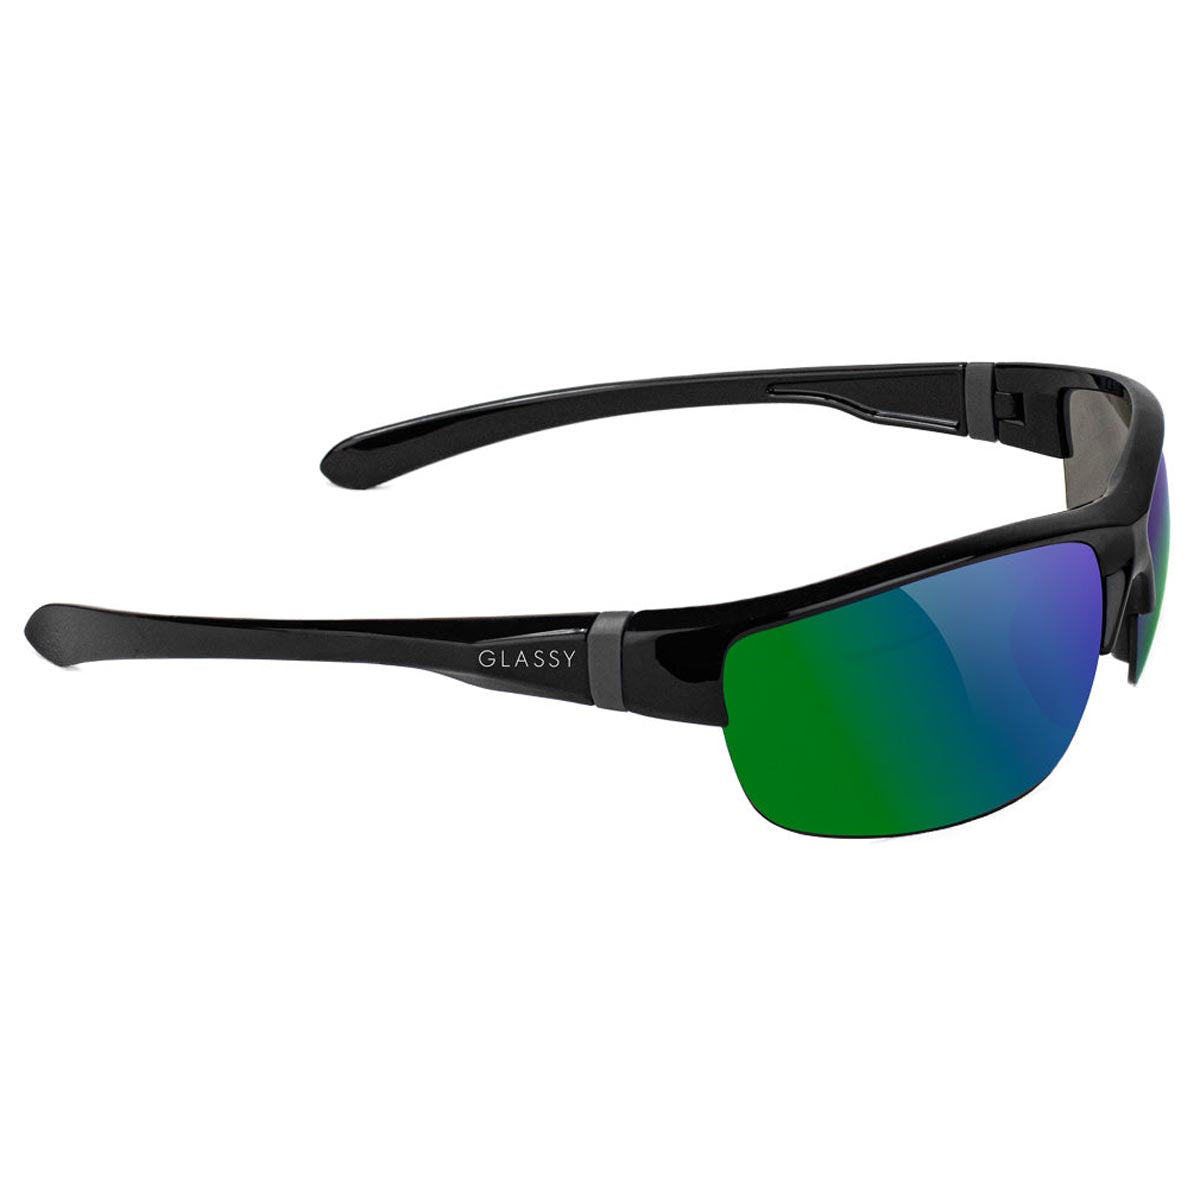 Glassy Weber Plus Polarized Sunglasses - Black/Green Mirror image 2